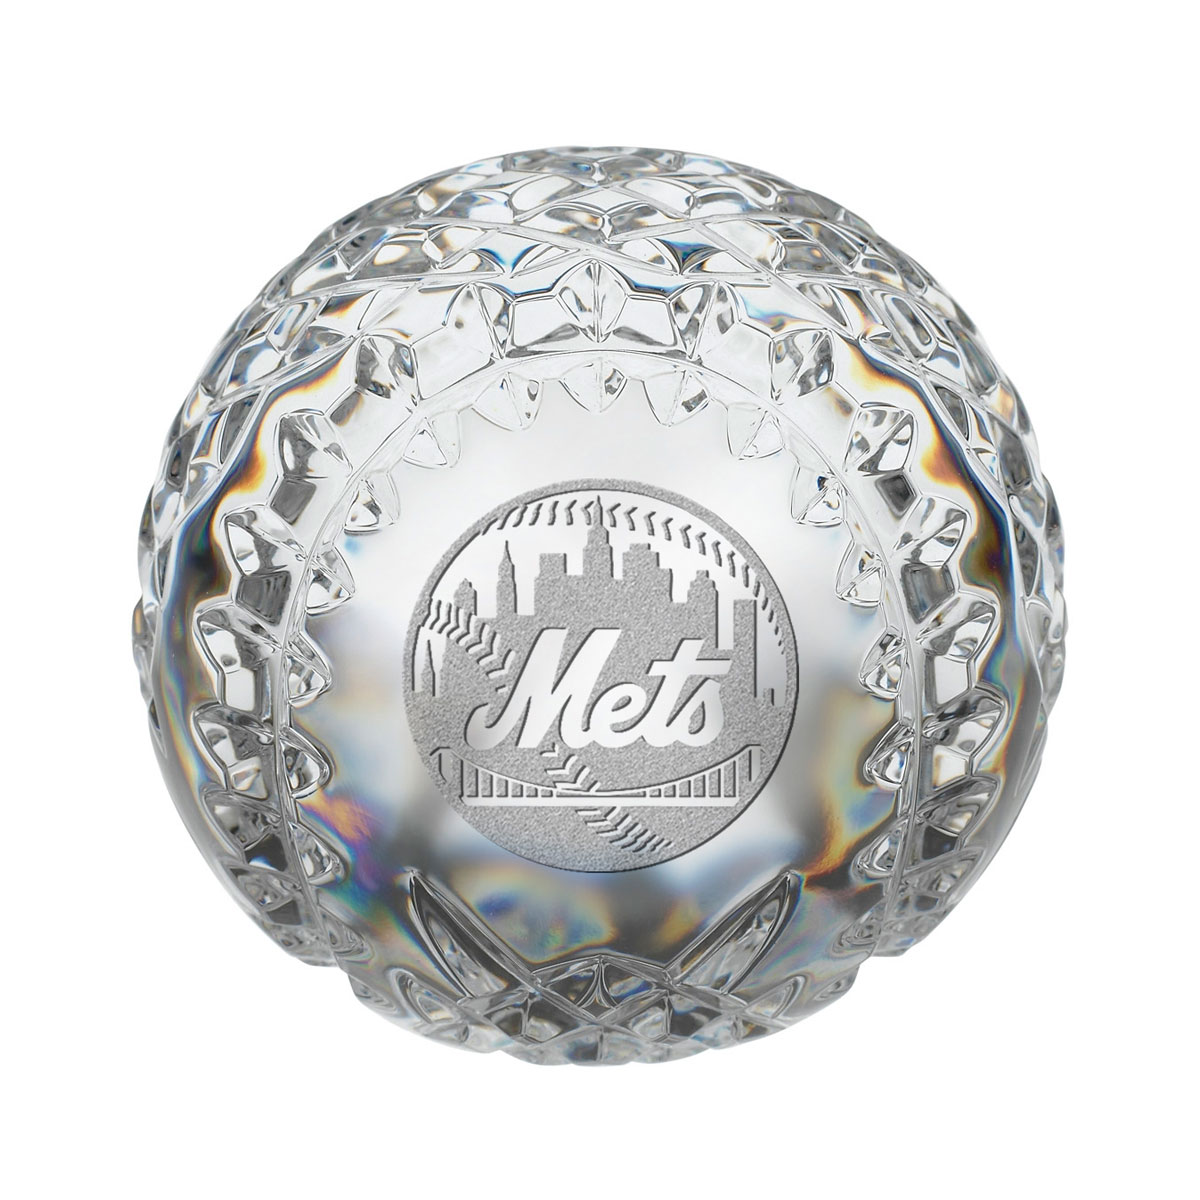 Waterford MLB New York Mets Crystal Baseball Paperweight